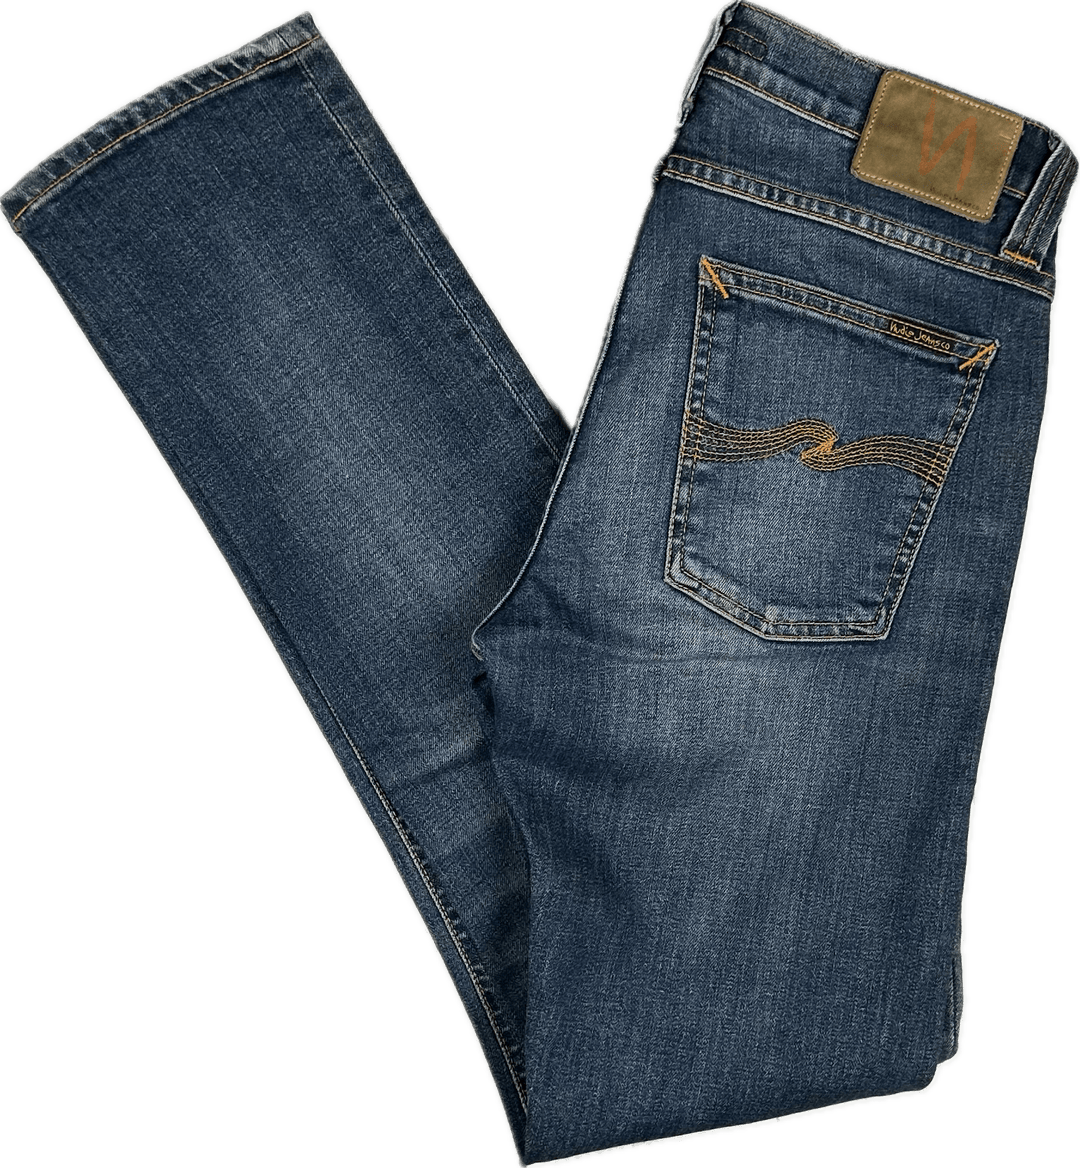 Nudie Jeans Co. 'Tube Tom' Org Blue Nights Jeans - Size 29/32 - Jean Pool